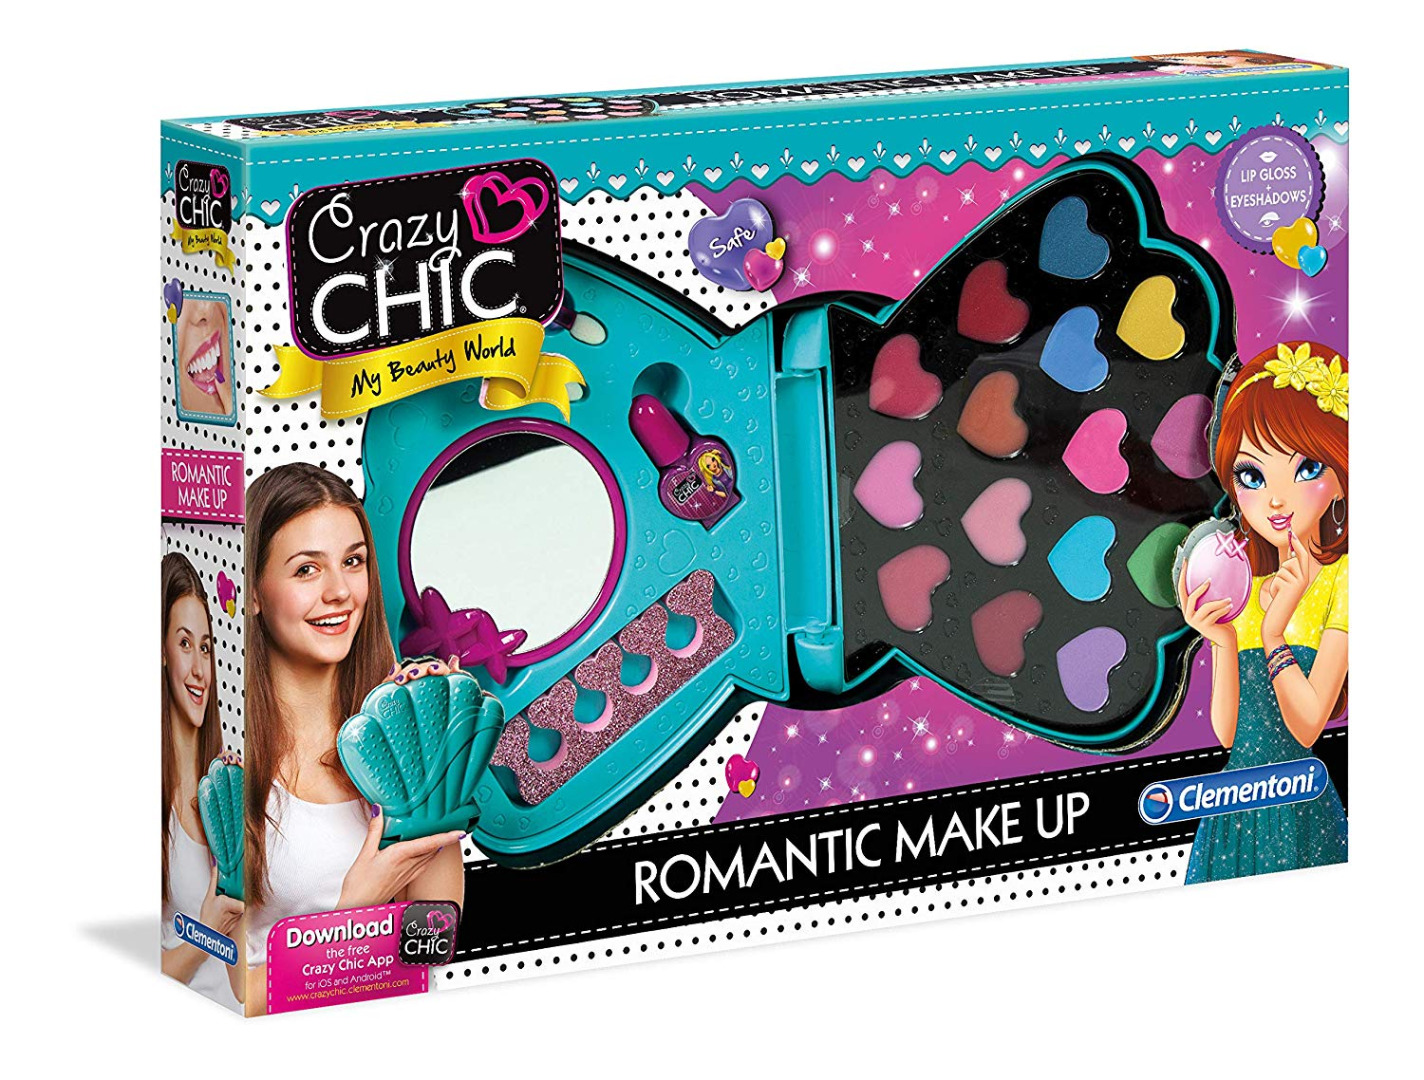 Crazy Chic Romantic Make Up